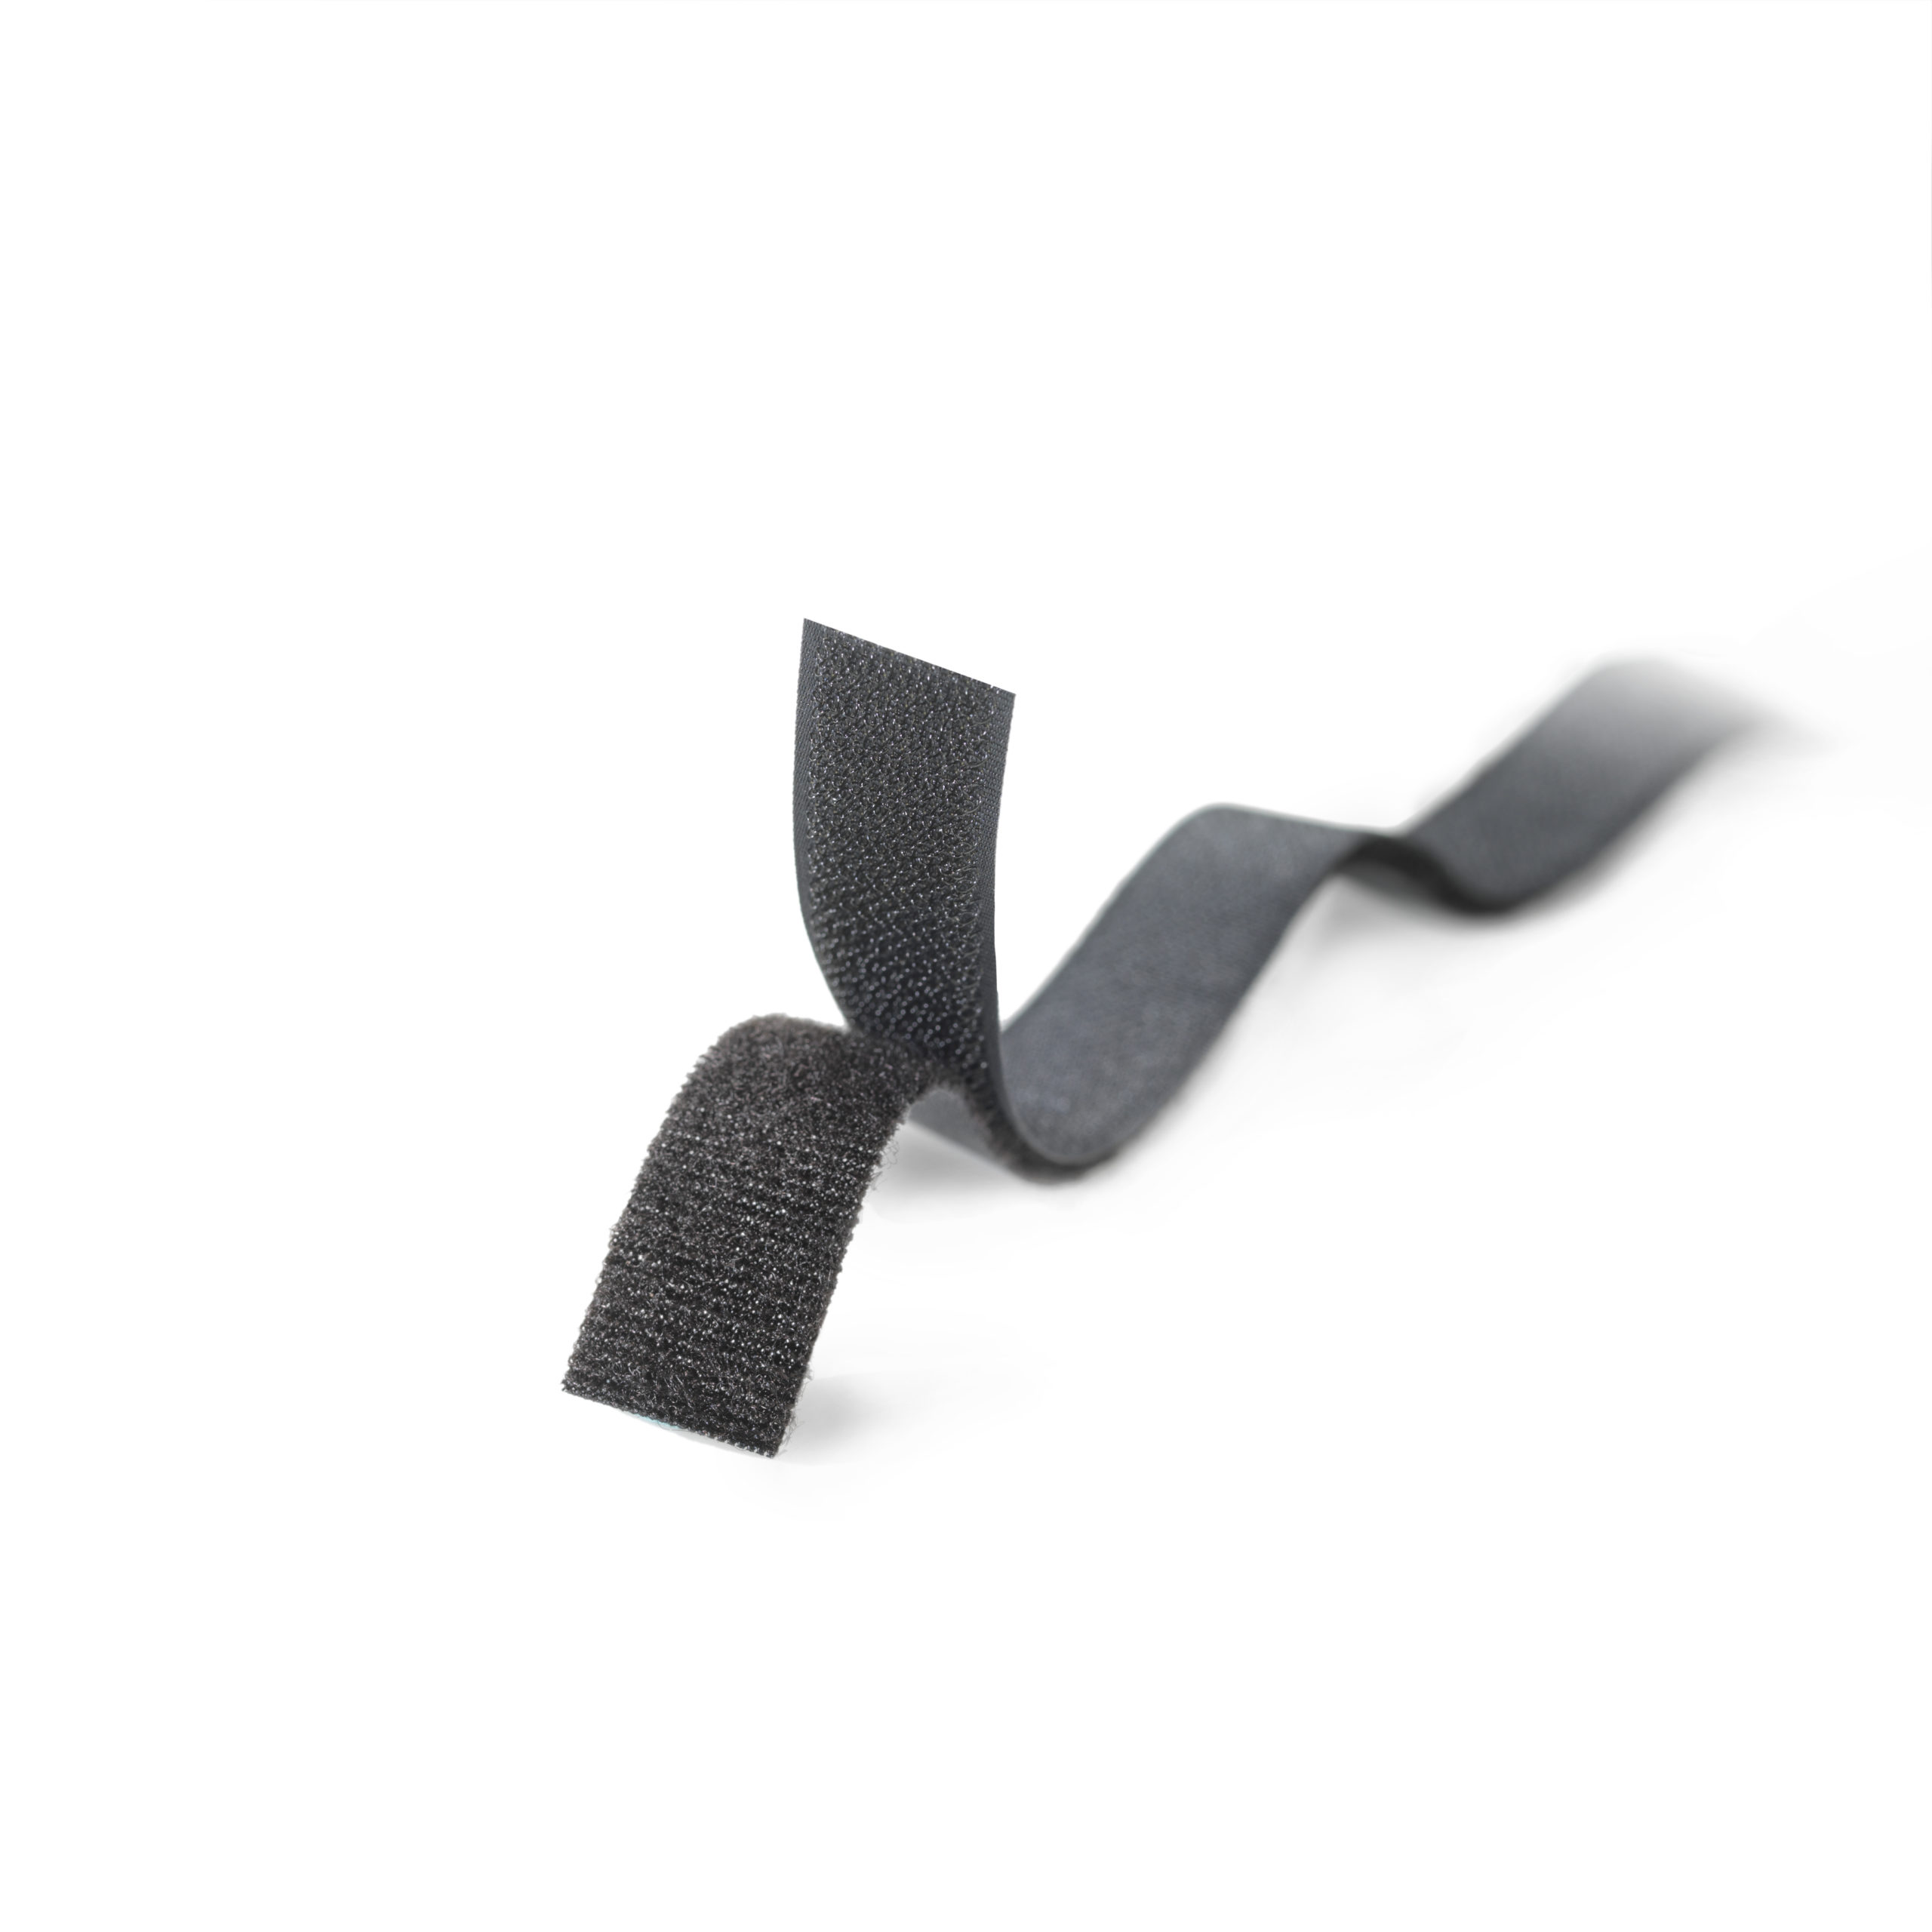 Velcro Brand - 4 Black Hook Sew-On by